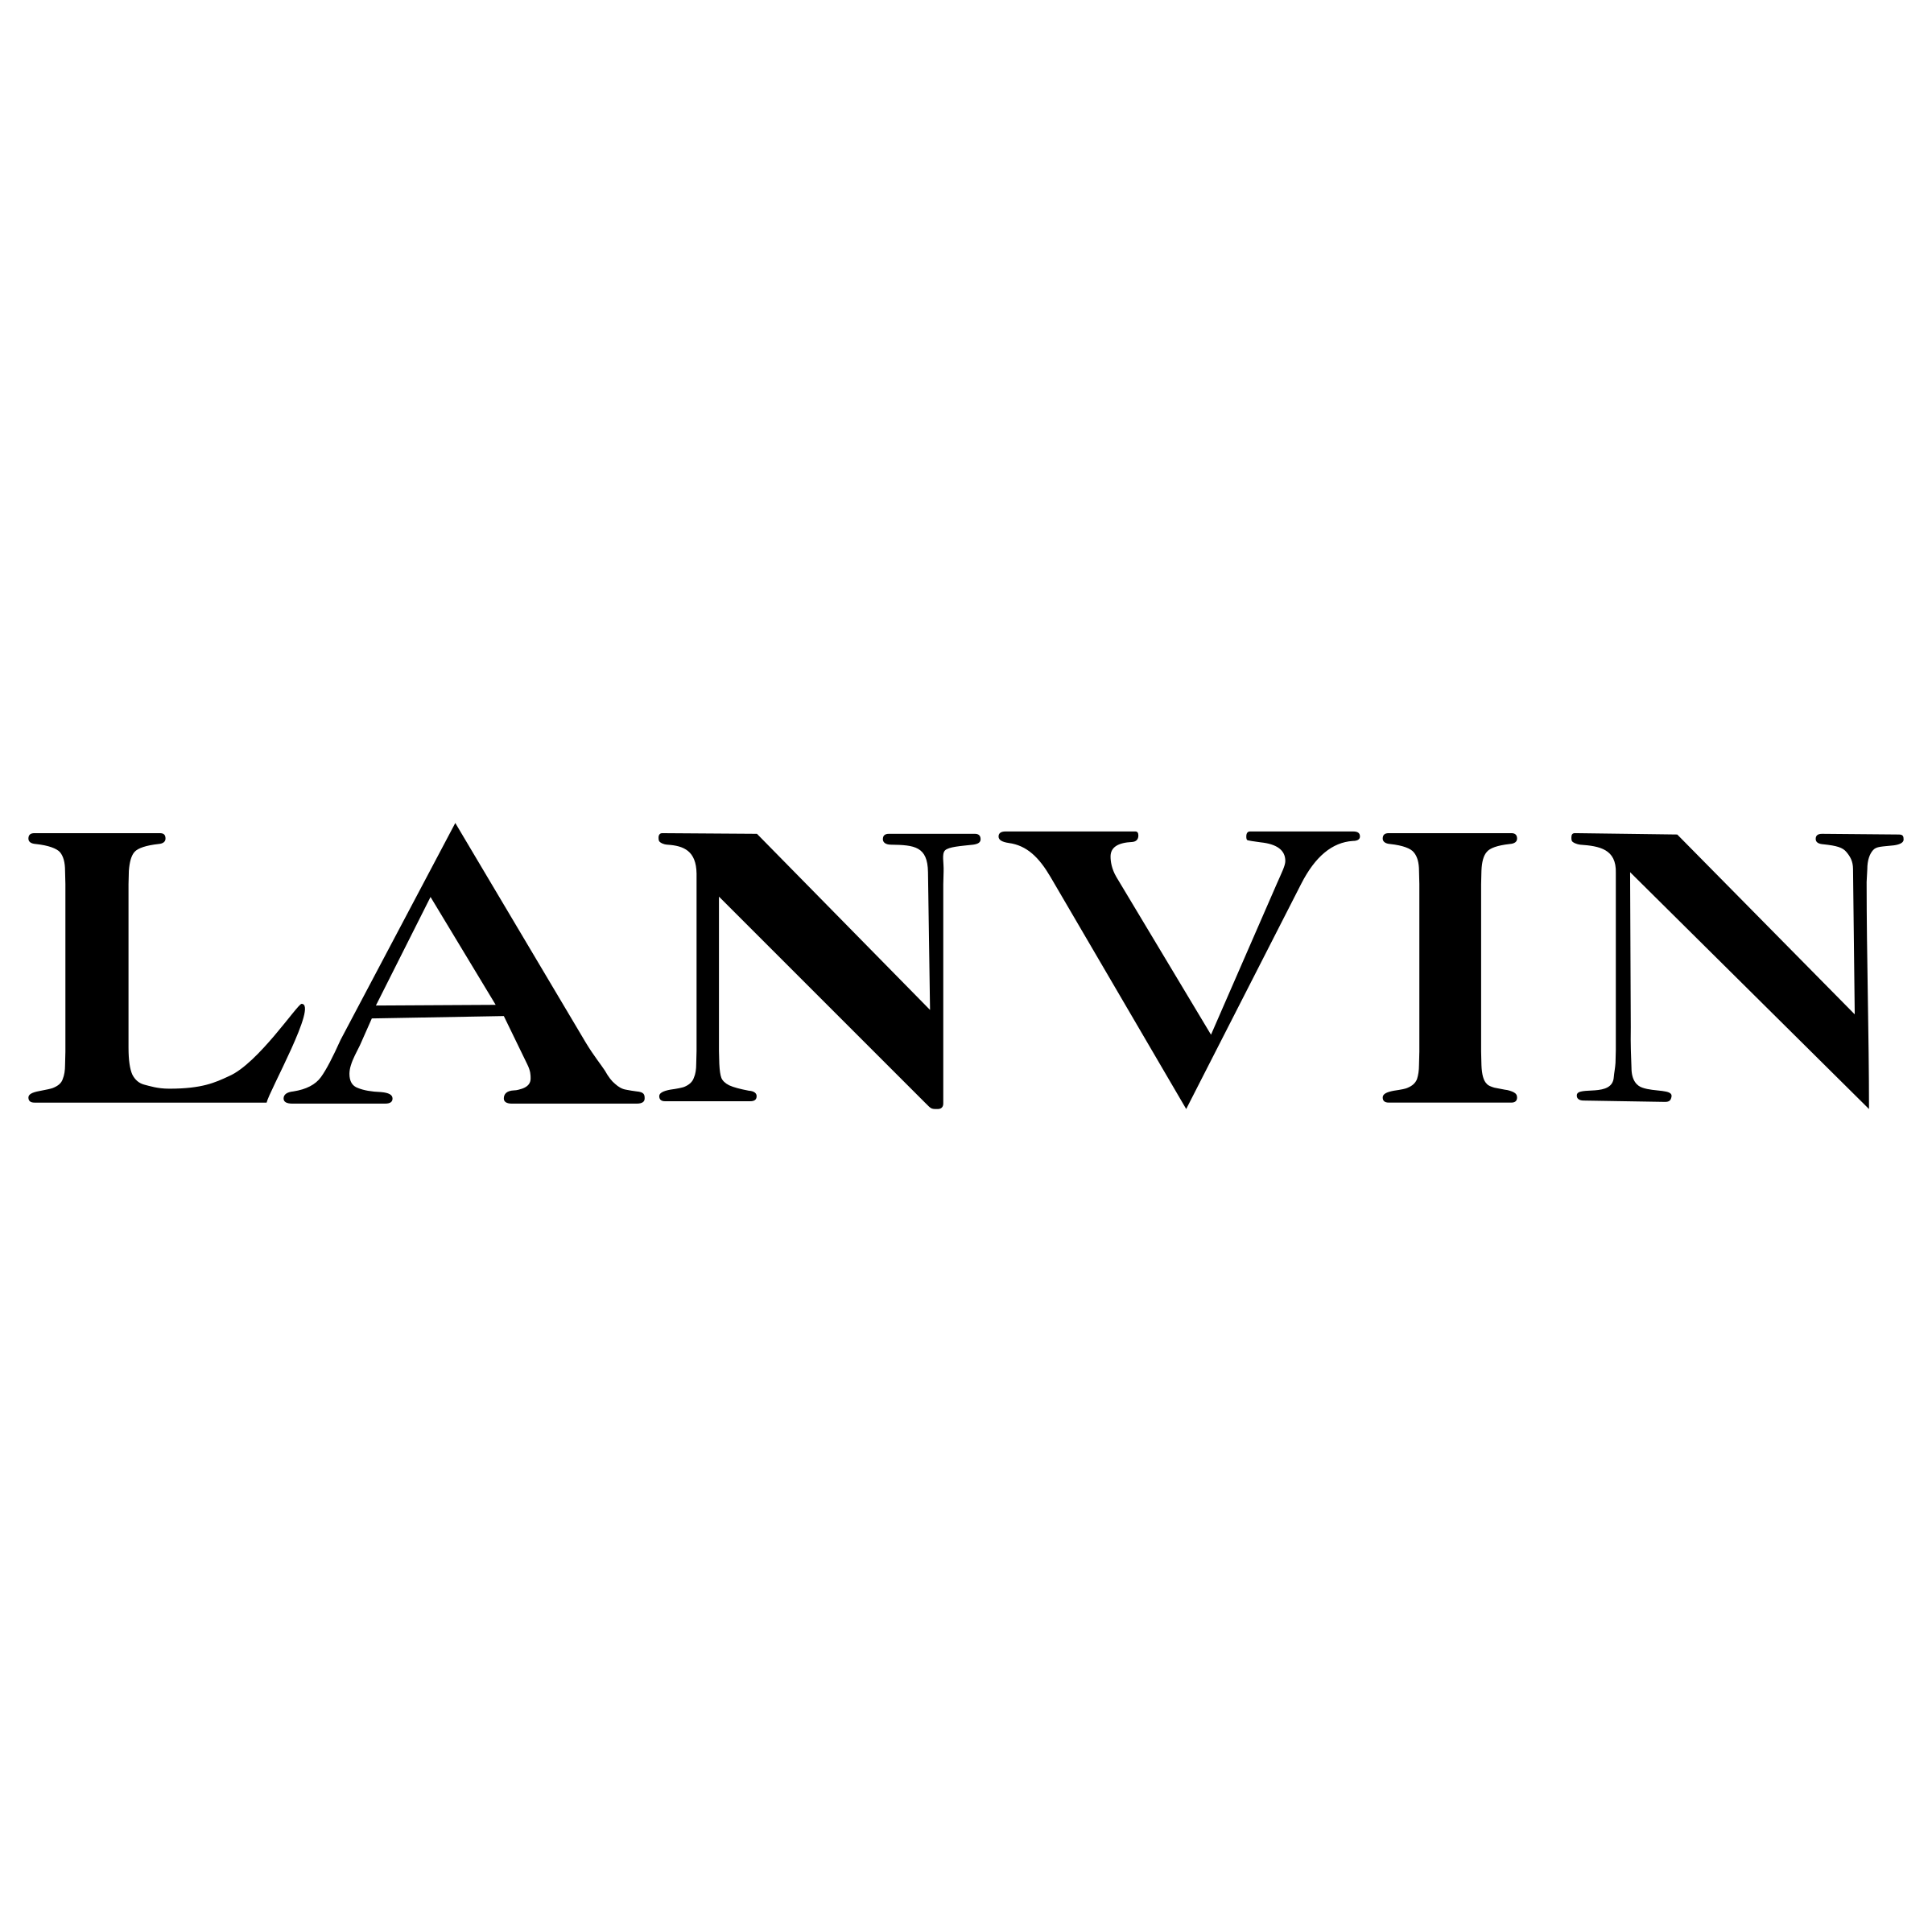 Lanvin Logo - Lanvin Logo PNG Transparent & SVG Vector - Freebie Supply